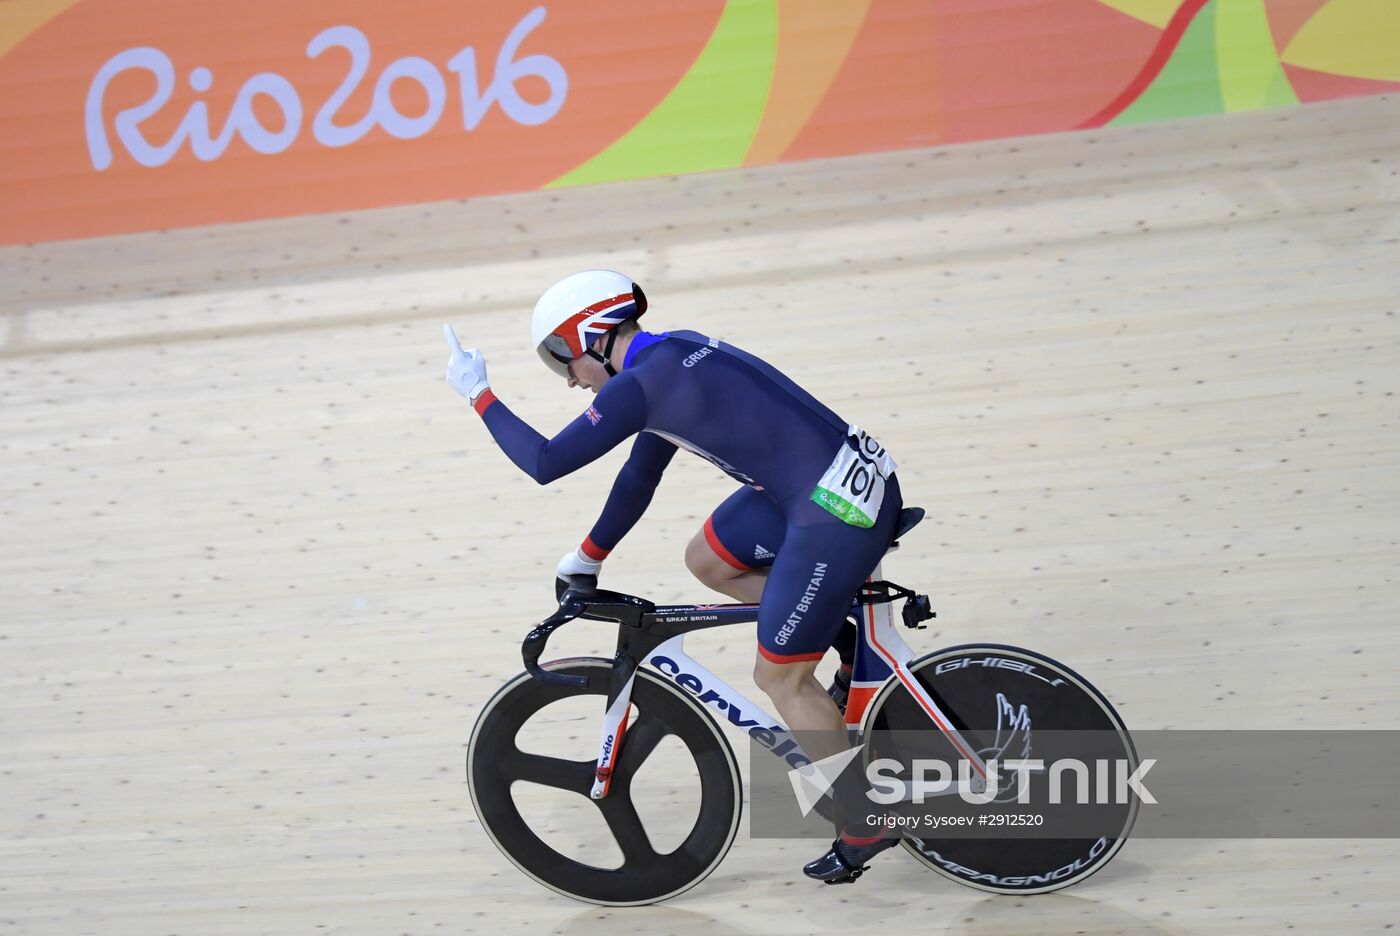 2016 Summer Olympics. Track cycling. Men's sprint